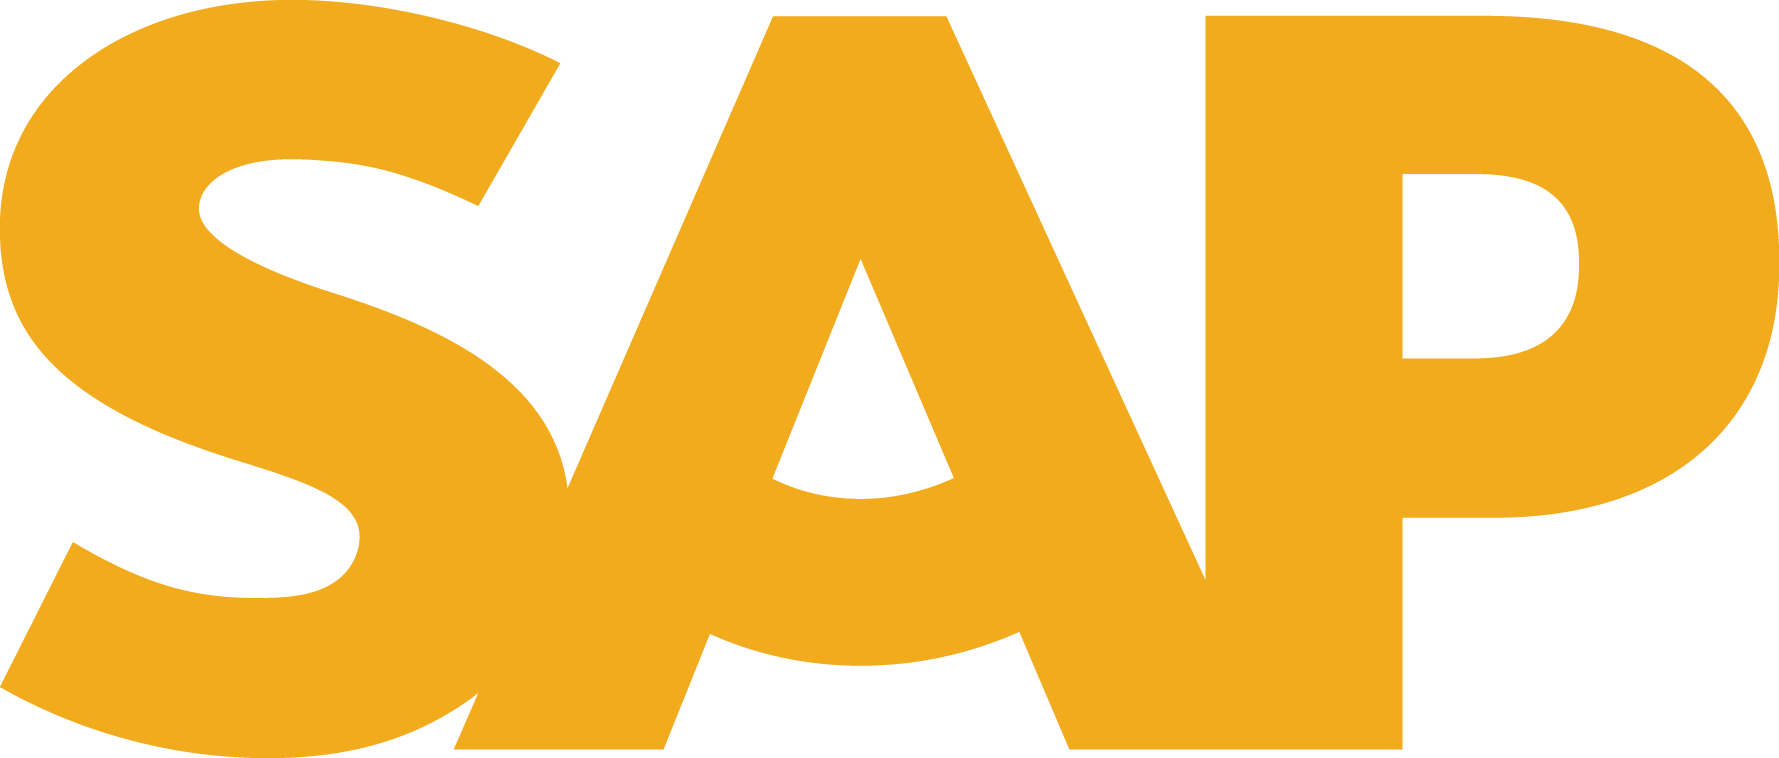 SAP Logo - SAP saluting the new ERA with New Logo | SAP Blogs